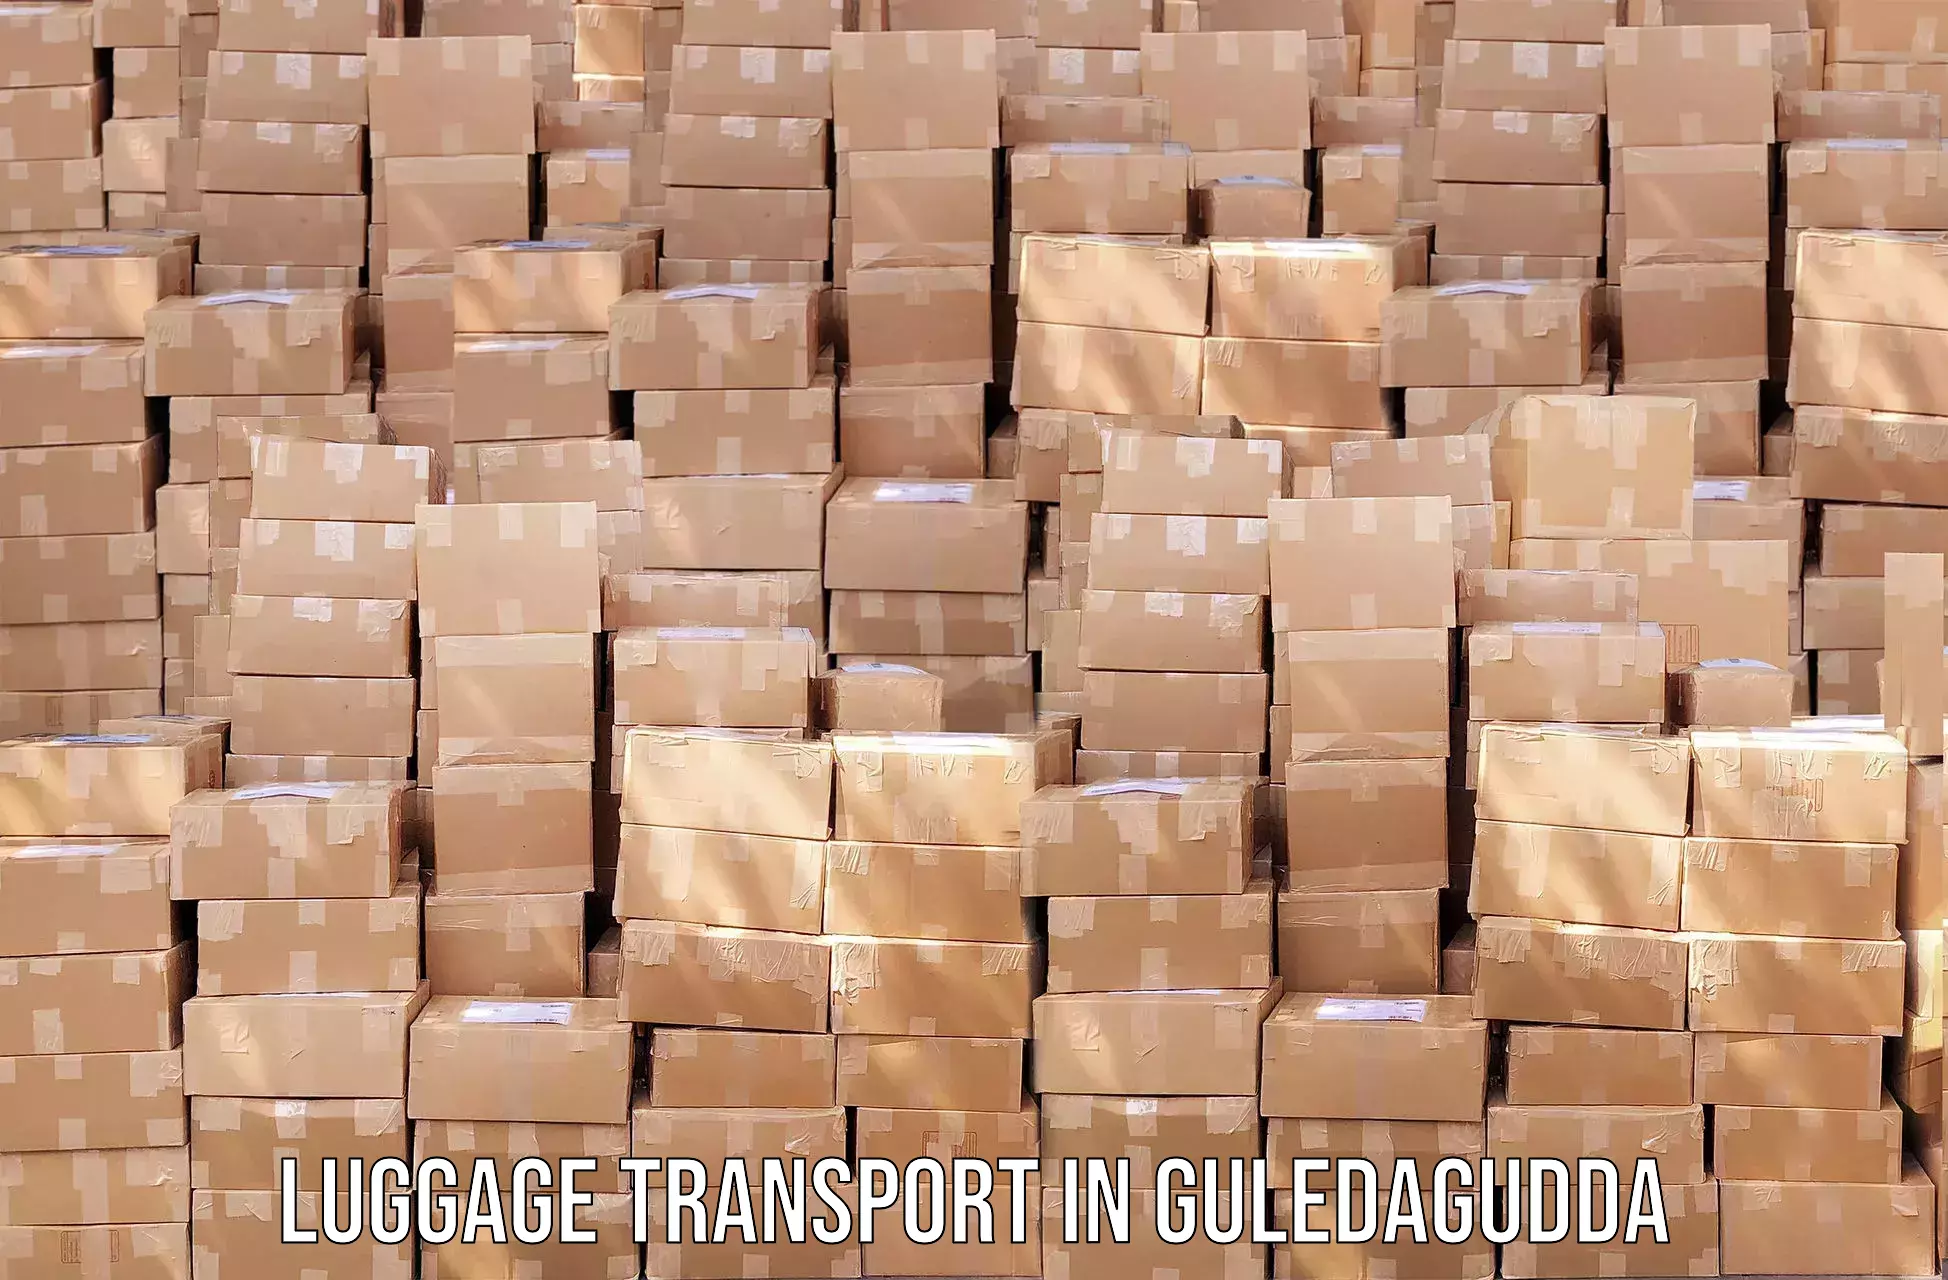 Timely baggage transport in Guledagudda